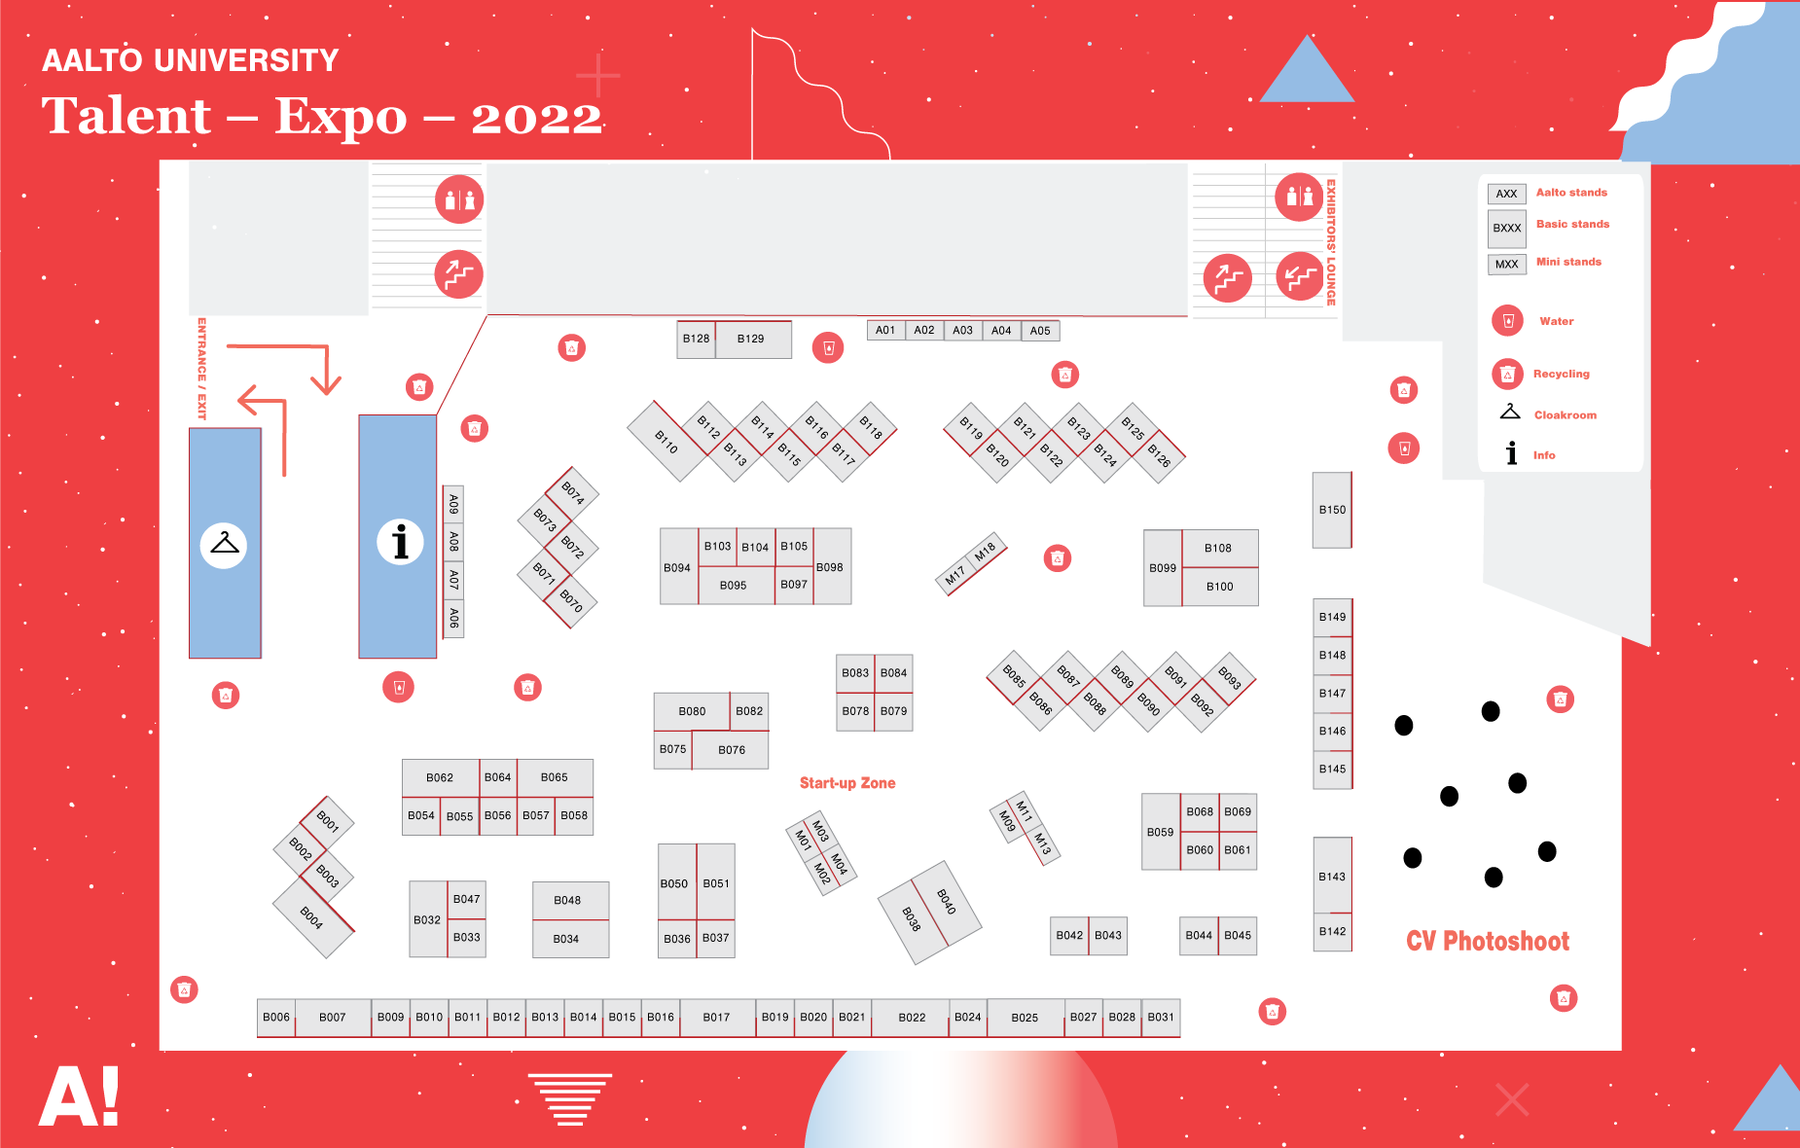 Final map of Aalto Talent Expo fair area